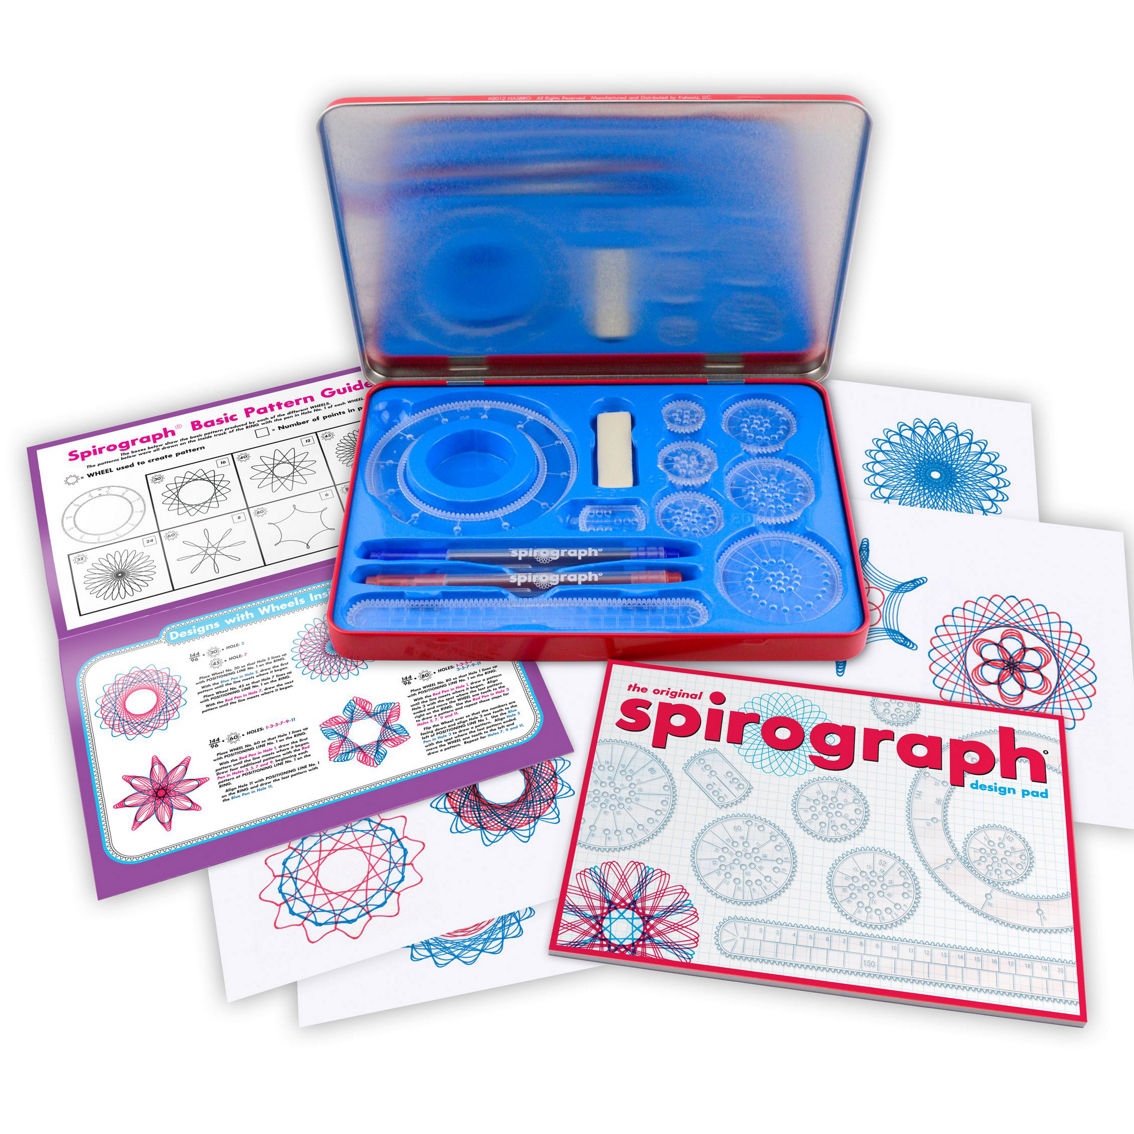 Spirograph Design Set Tin - Image 2 of 3